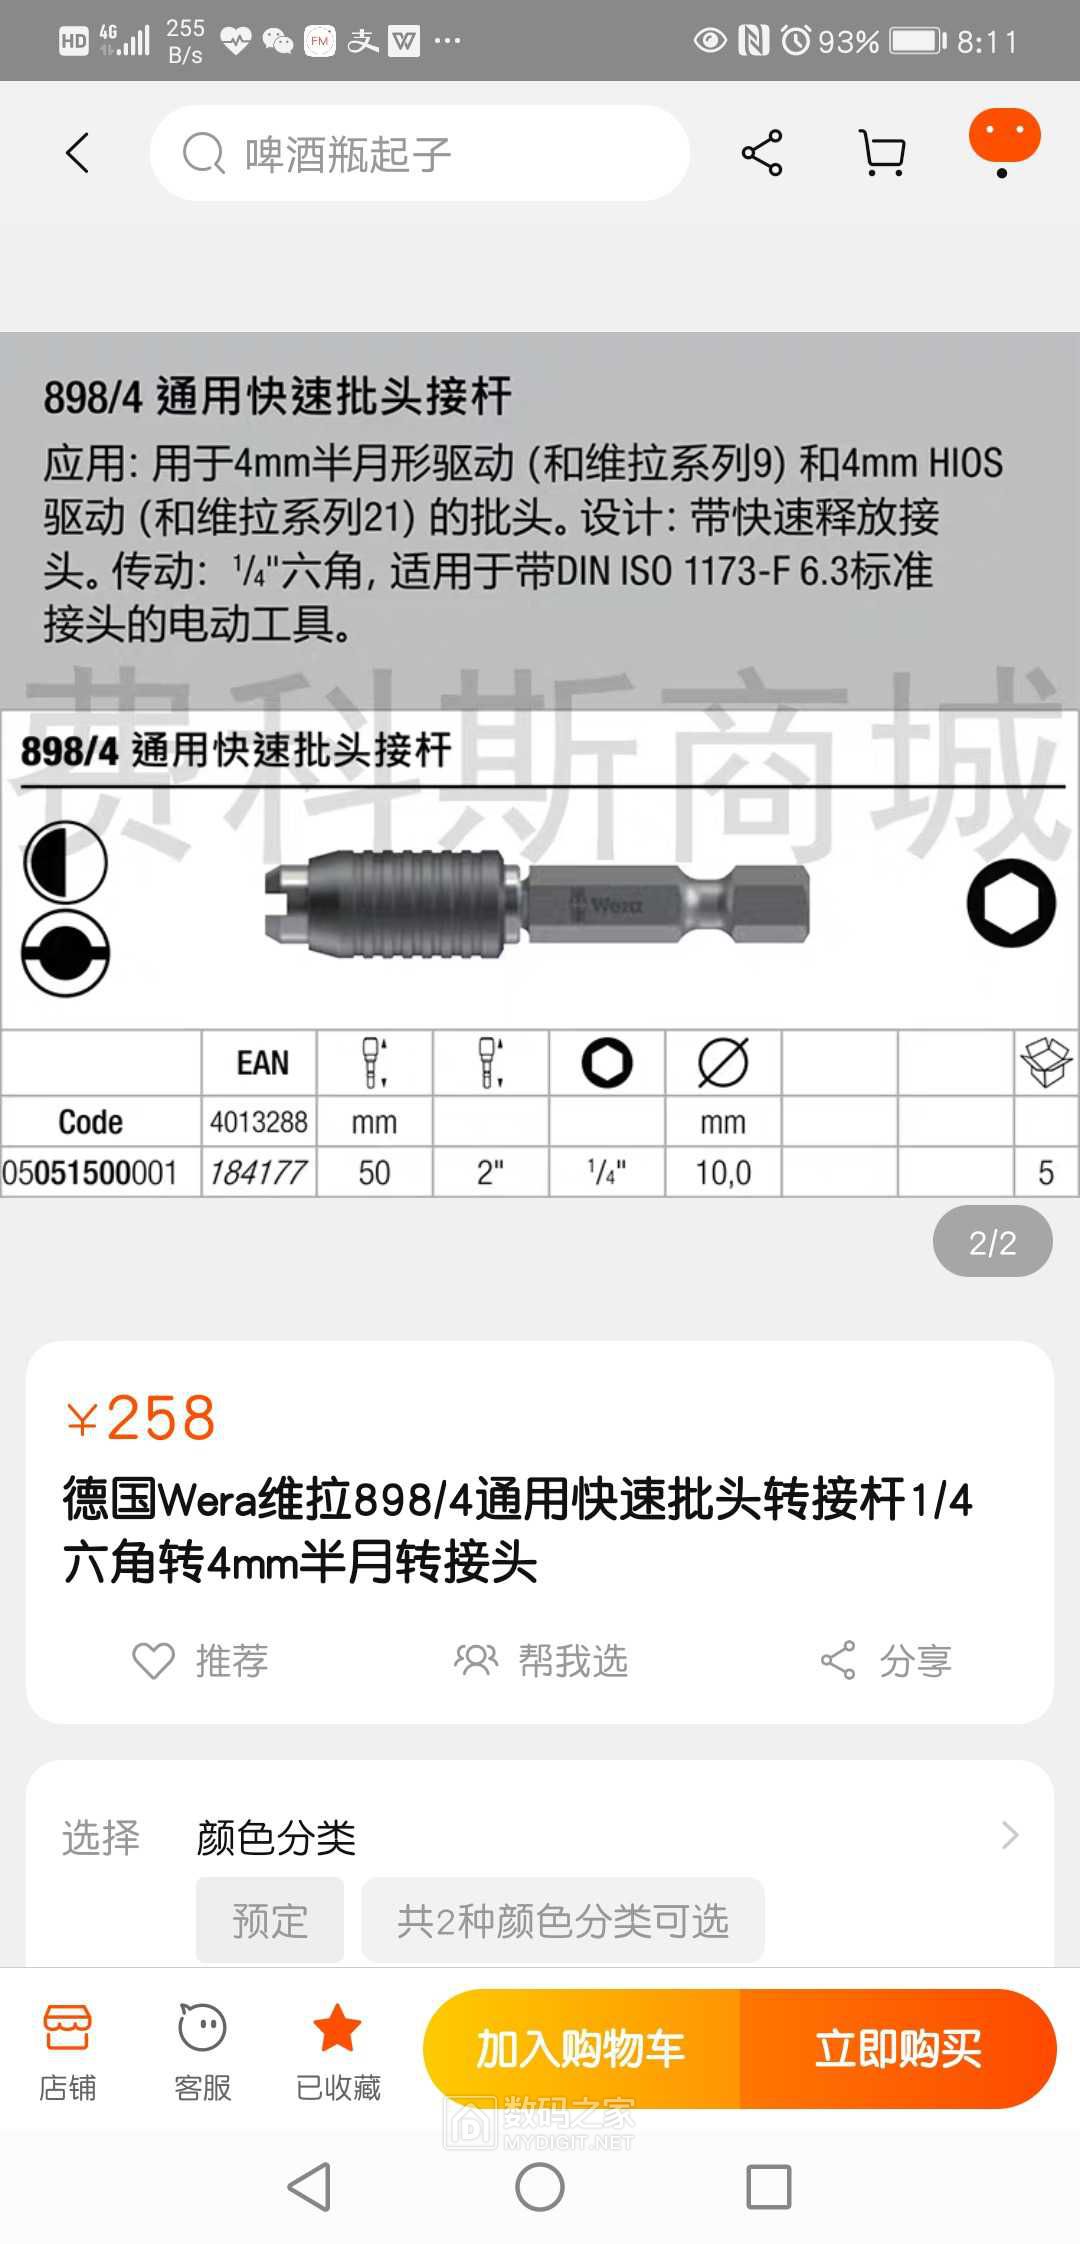 Screenshot_20210115_081116_com.taobao.taobao.jpg